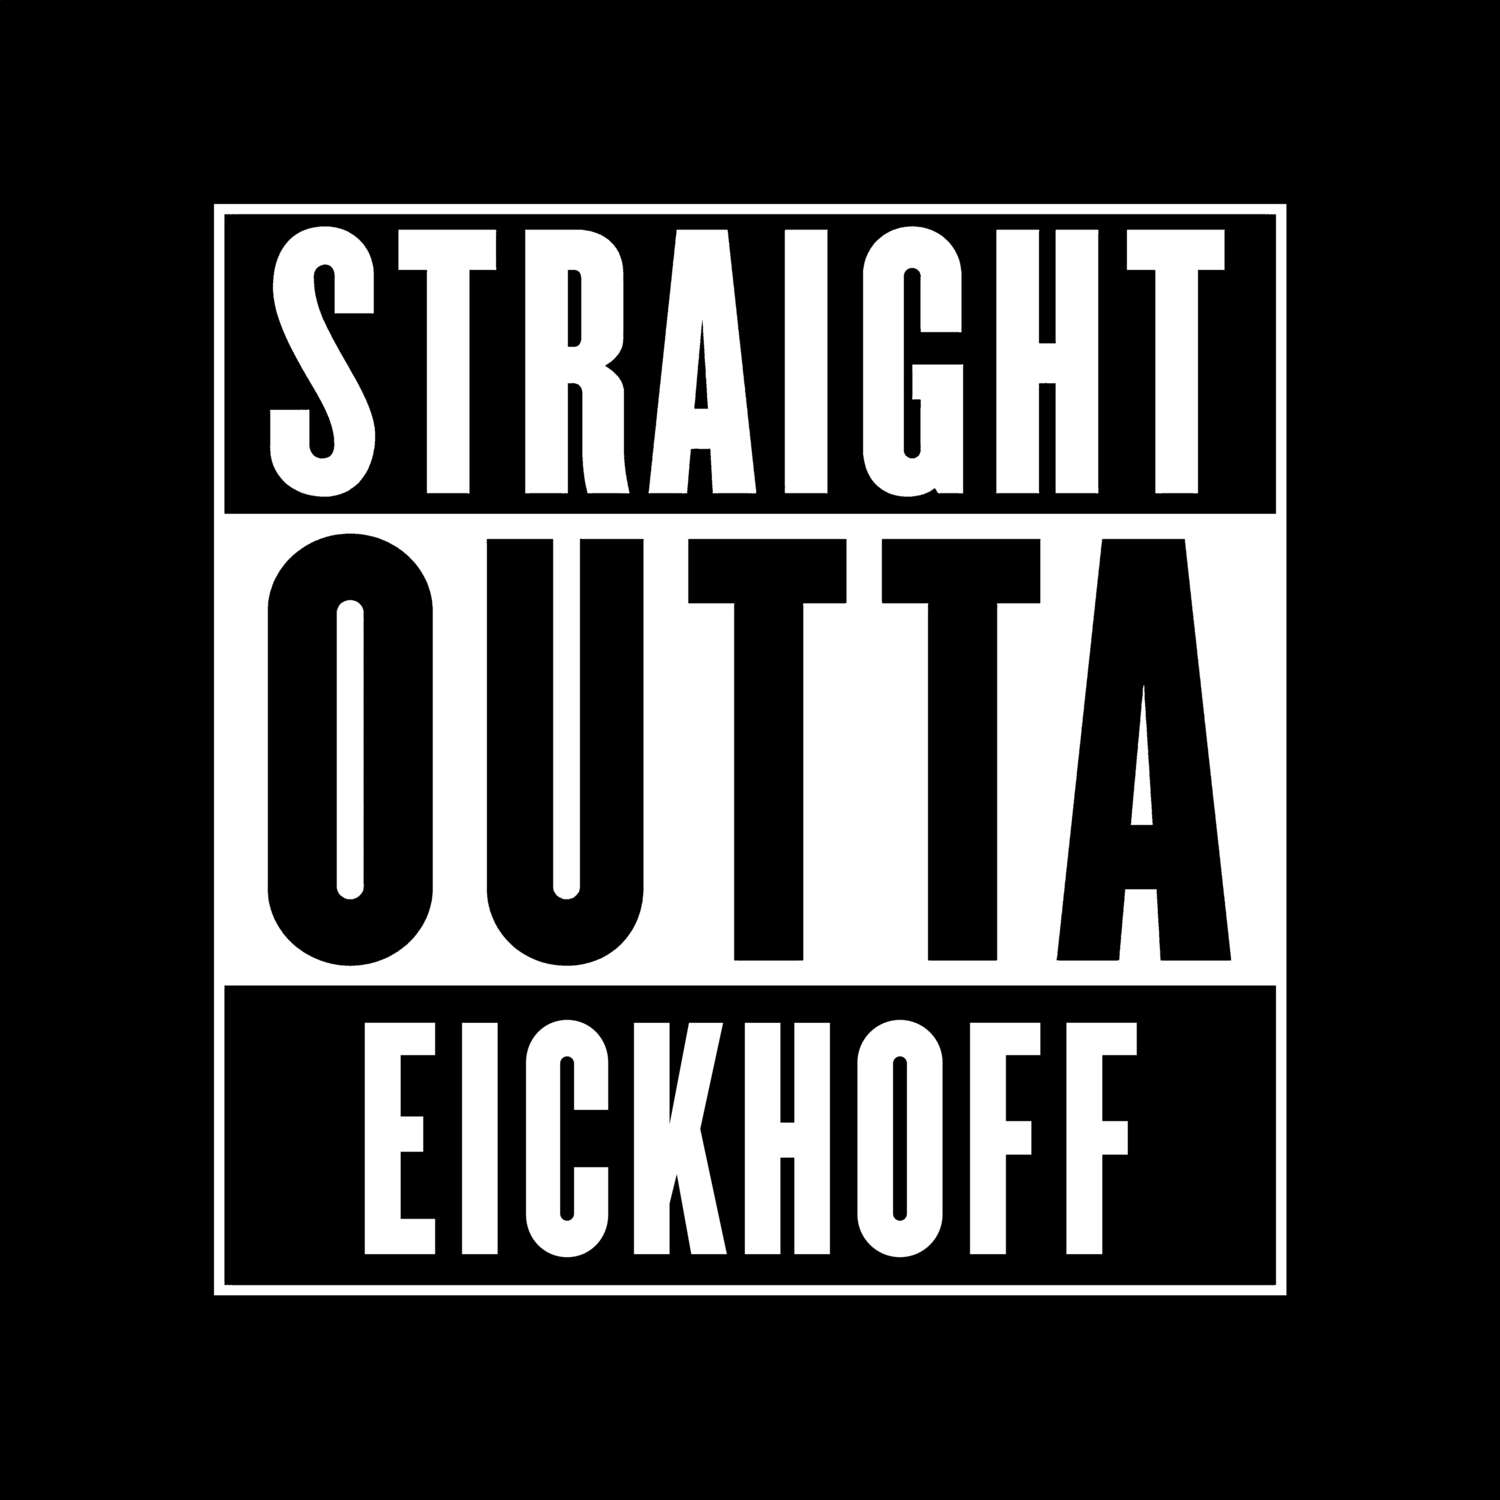 Eickhoff T-Shirt »Straight Outta«